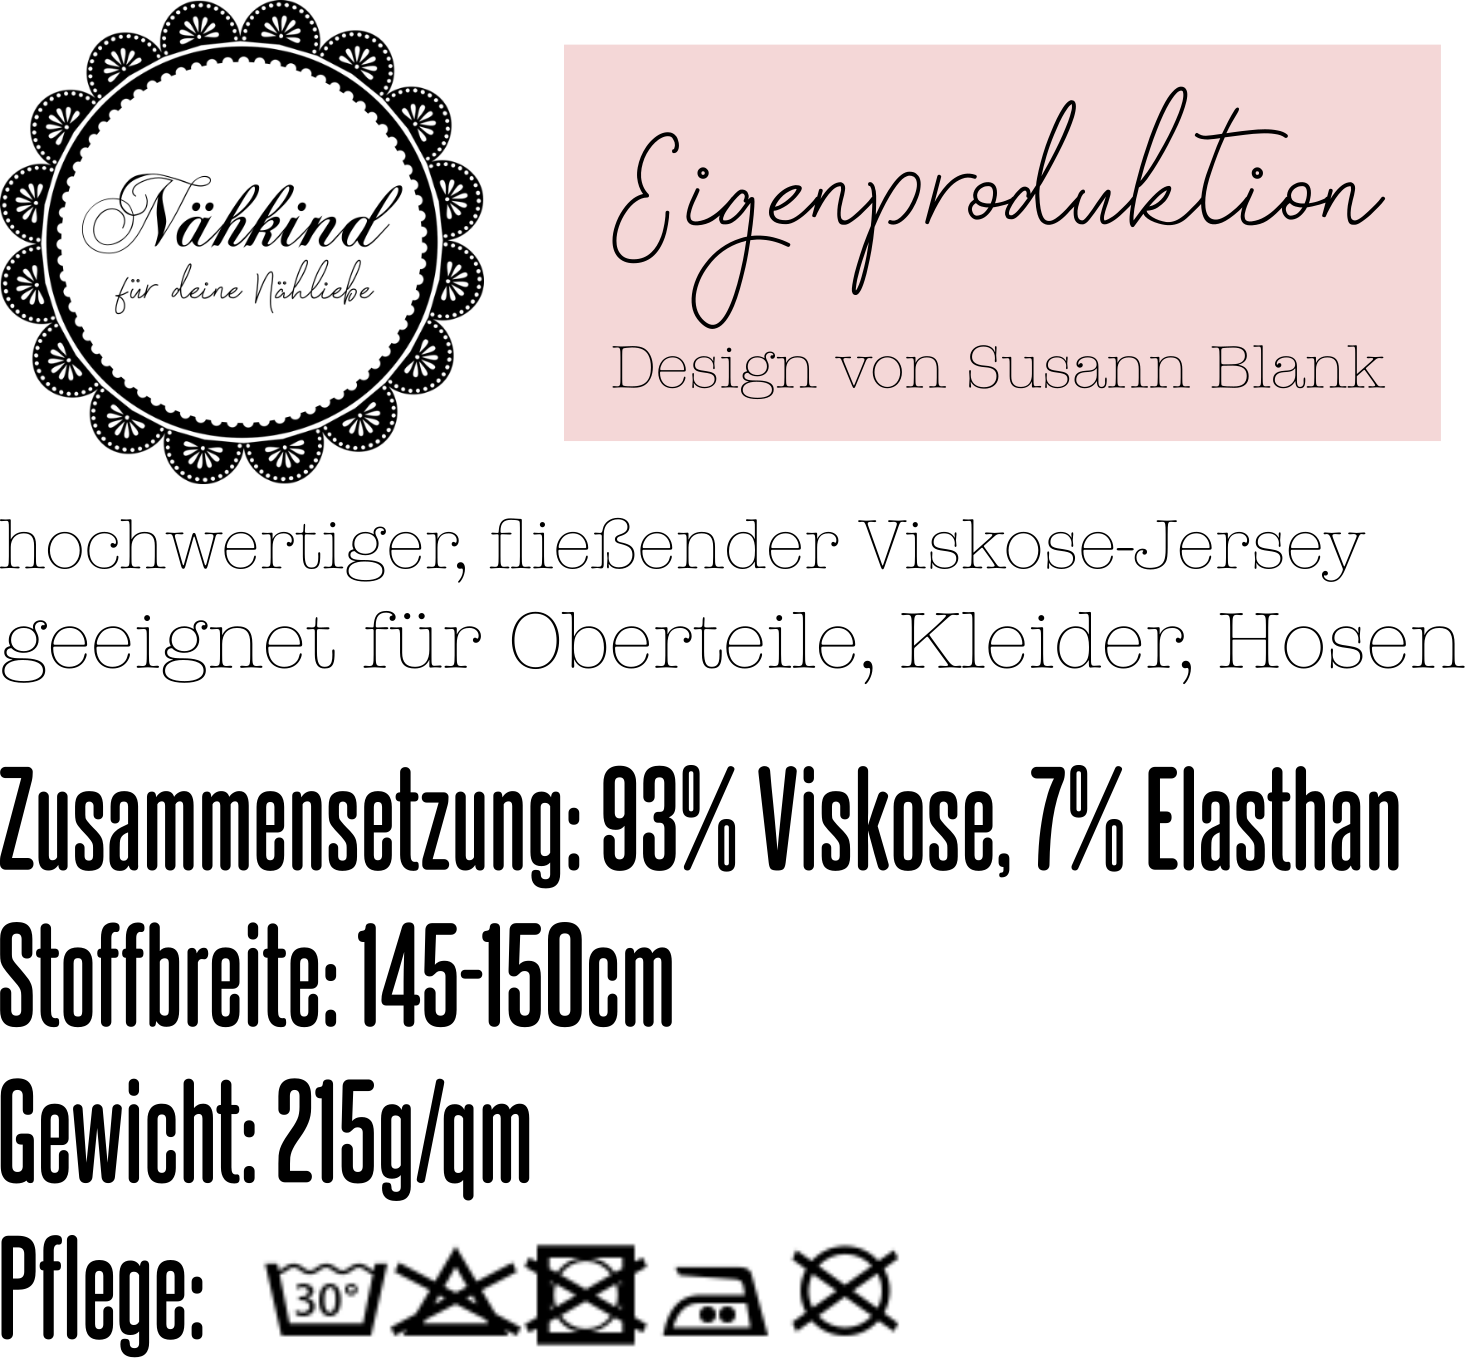 Shopdescription-Viskosejersey-Nahkind